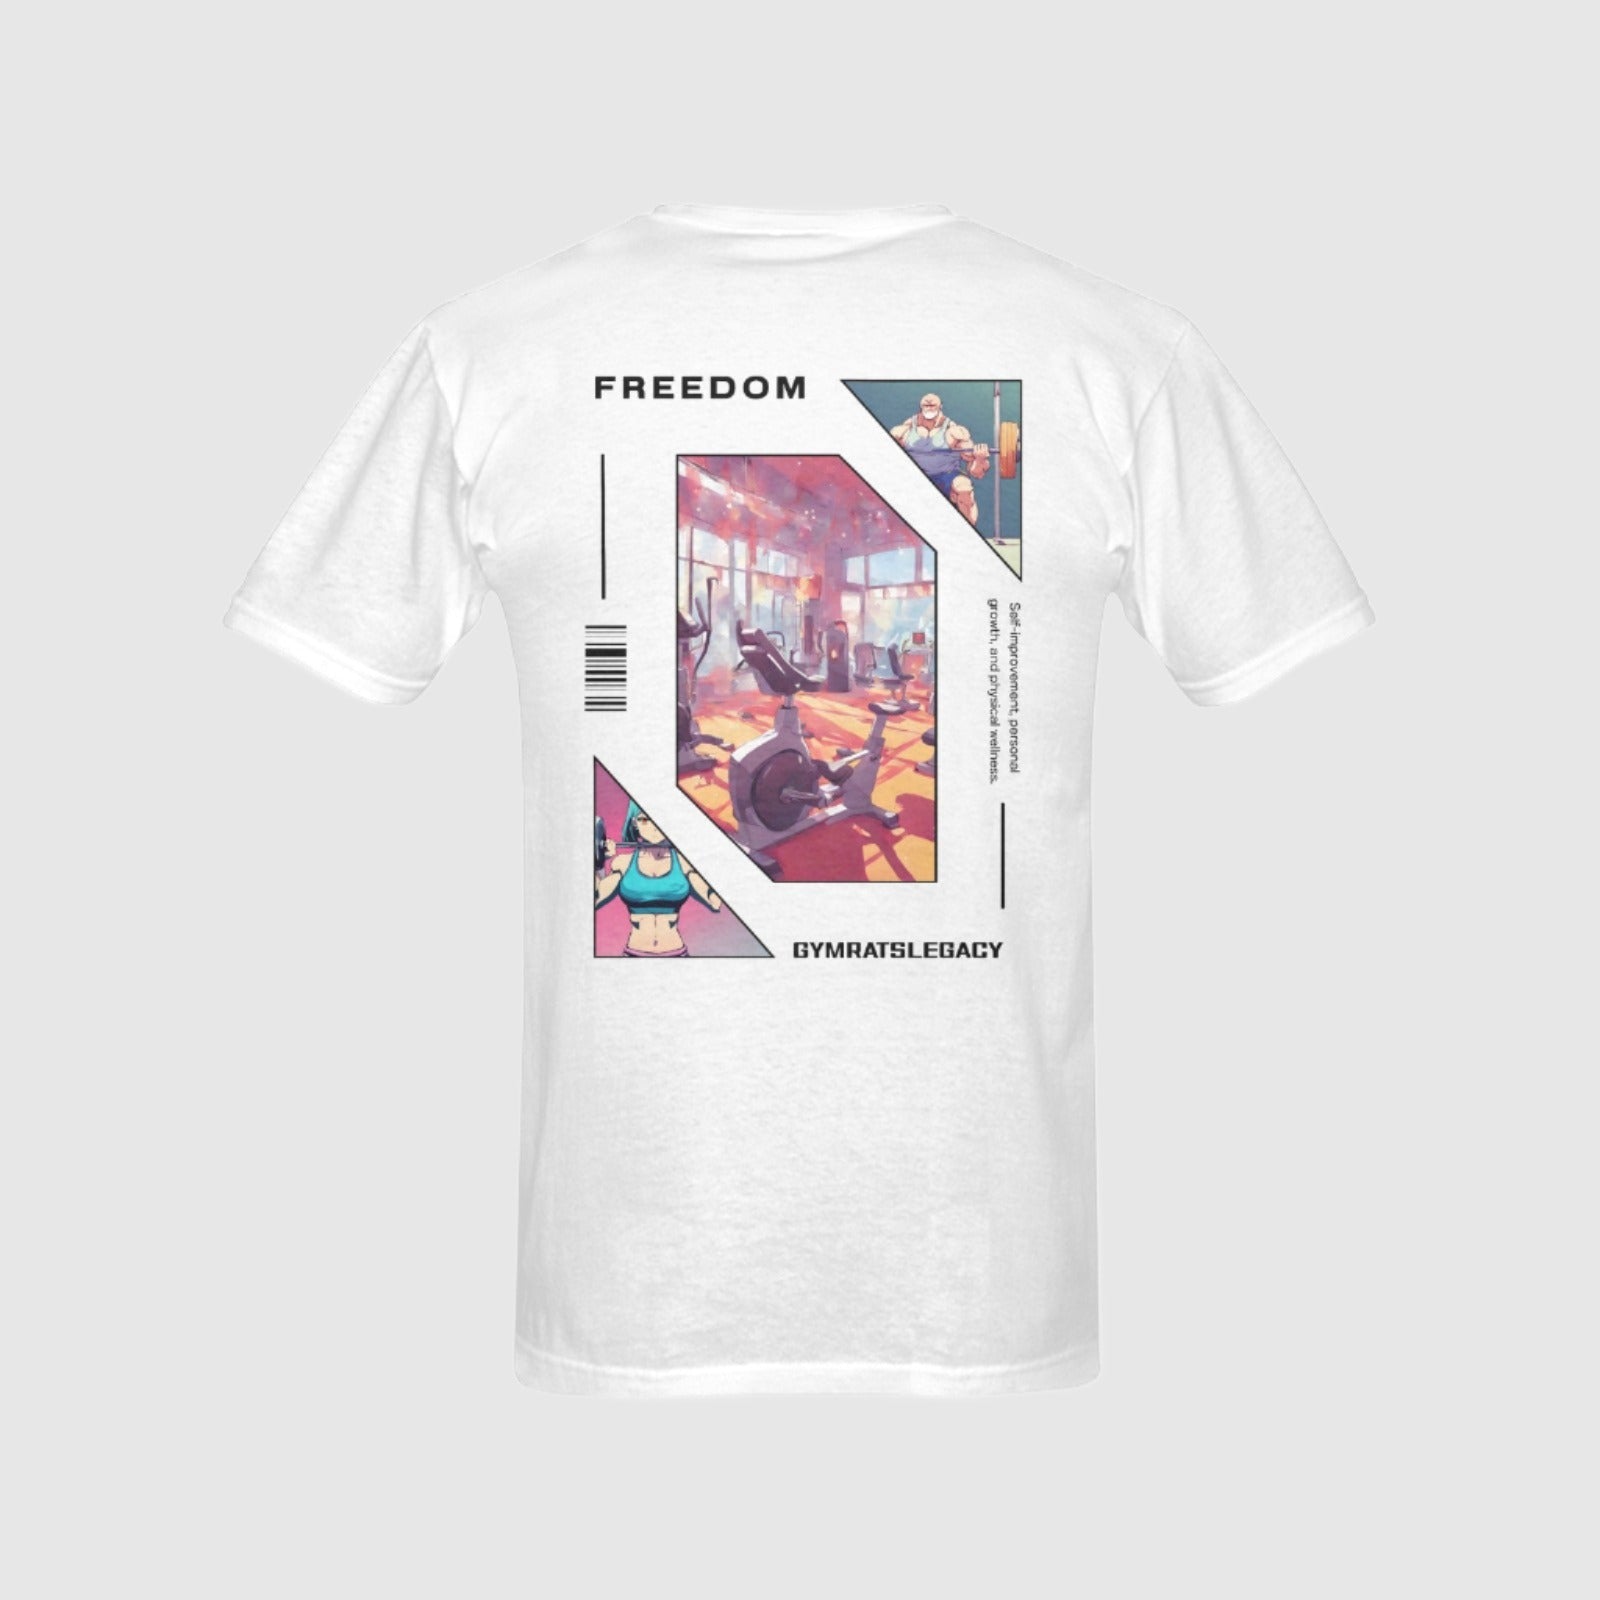 Freedom T-Shirt - Gymratslegacy